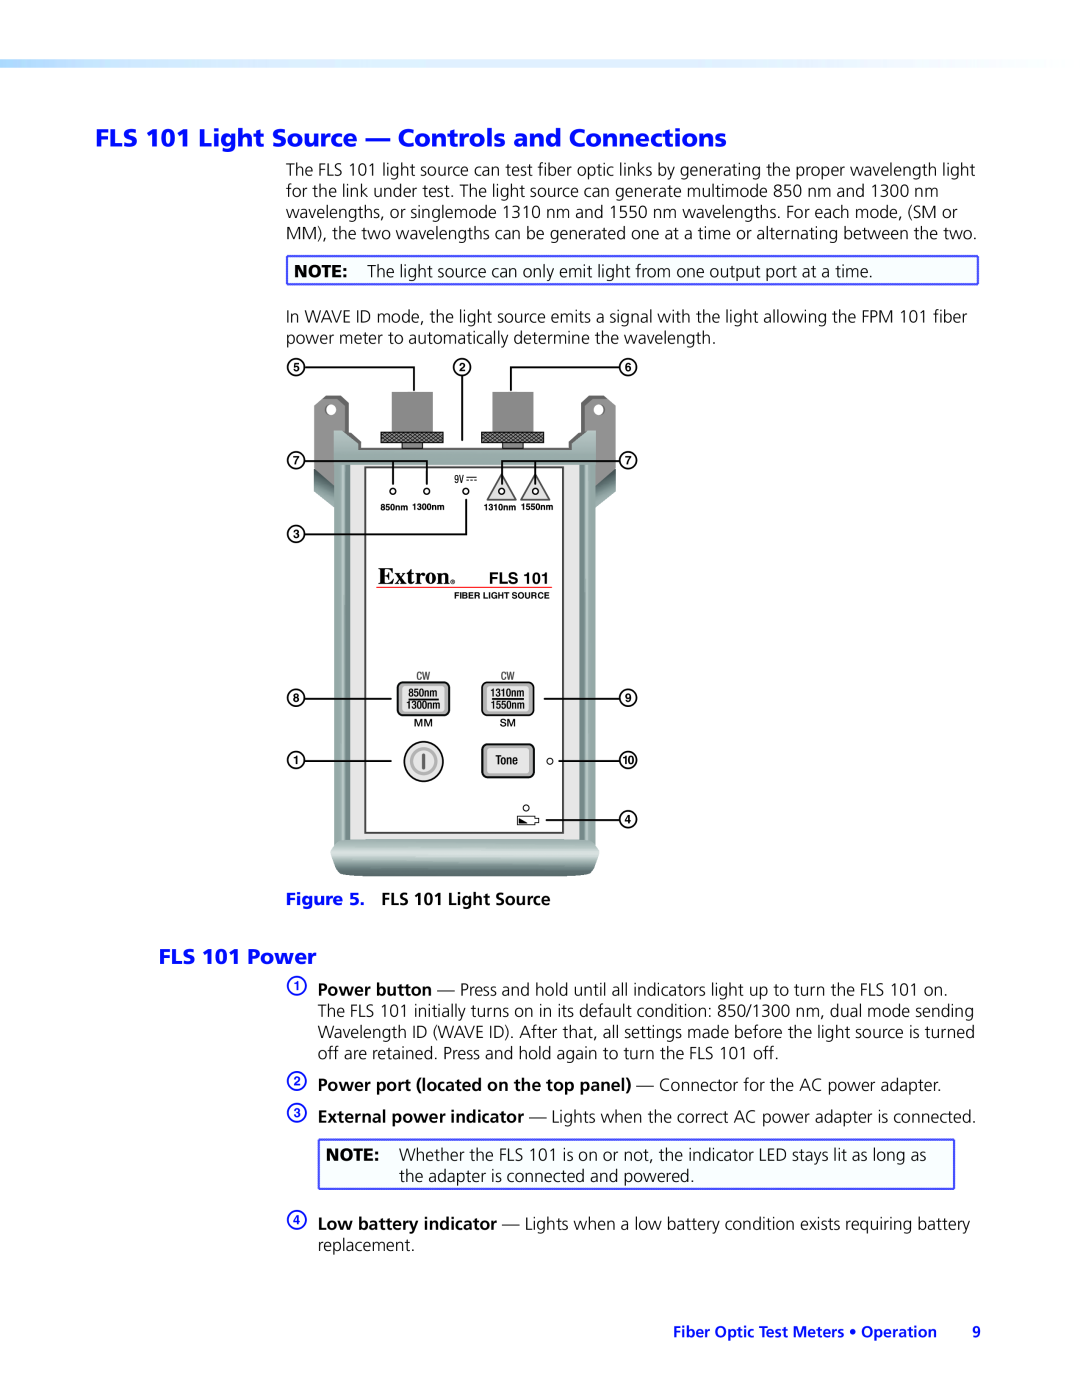 Extron electronic FPM 101 manual FLS 101 Light Source - Controls and Connections, e g c h a, f g i j d, FLS 101 Power 